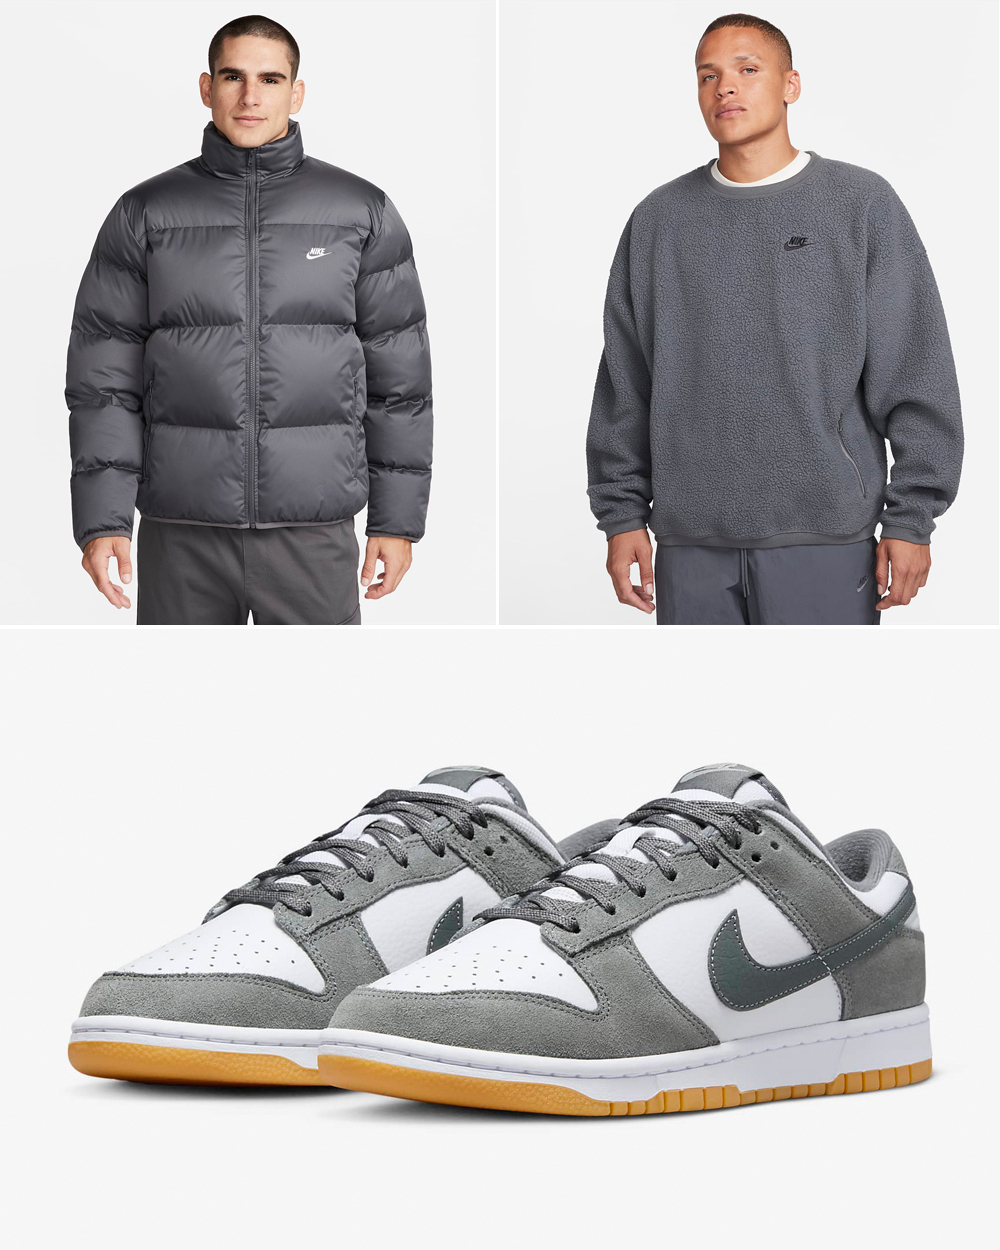 Nike-Dunk-Low-Smoke-Grey-Matching-Outfits